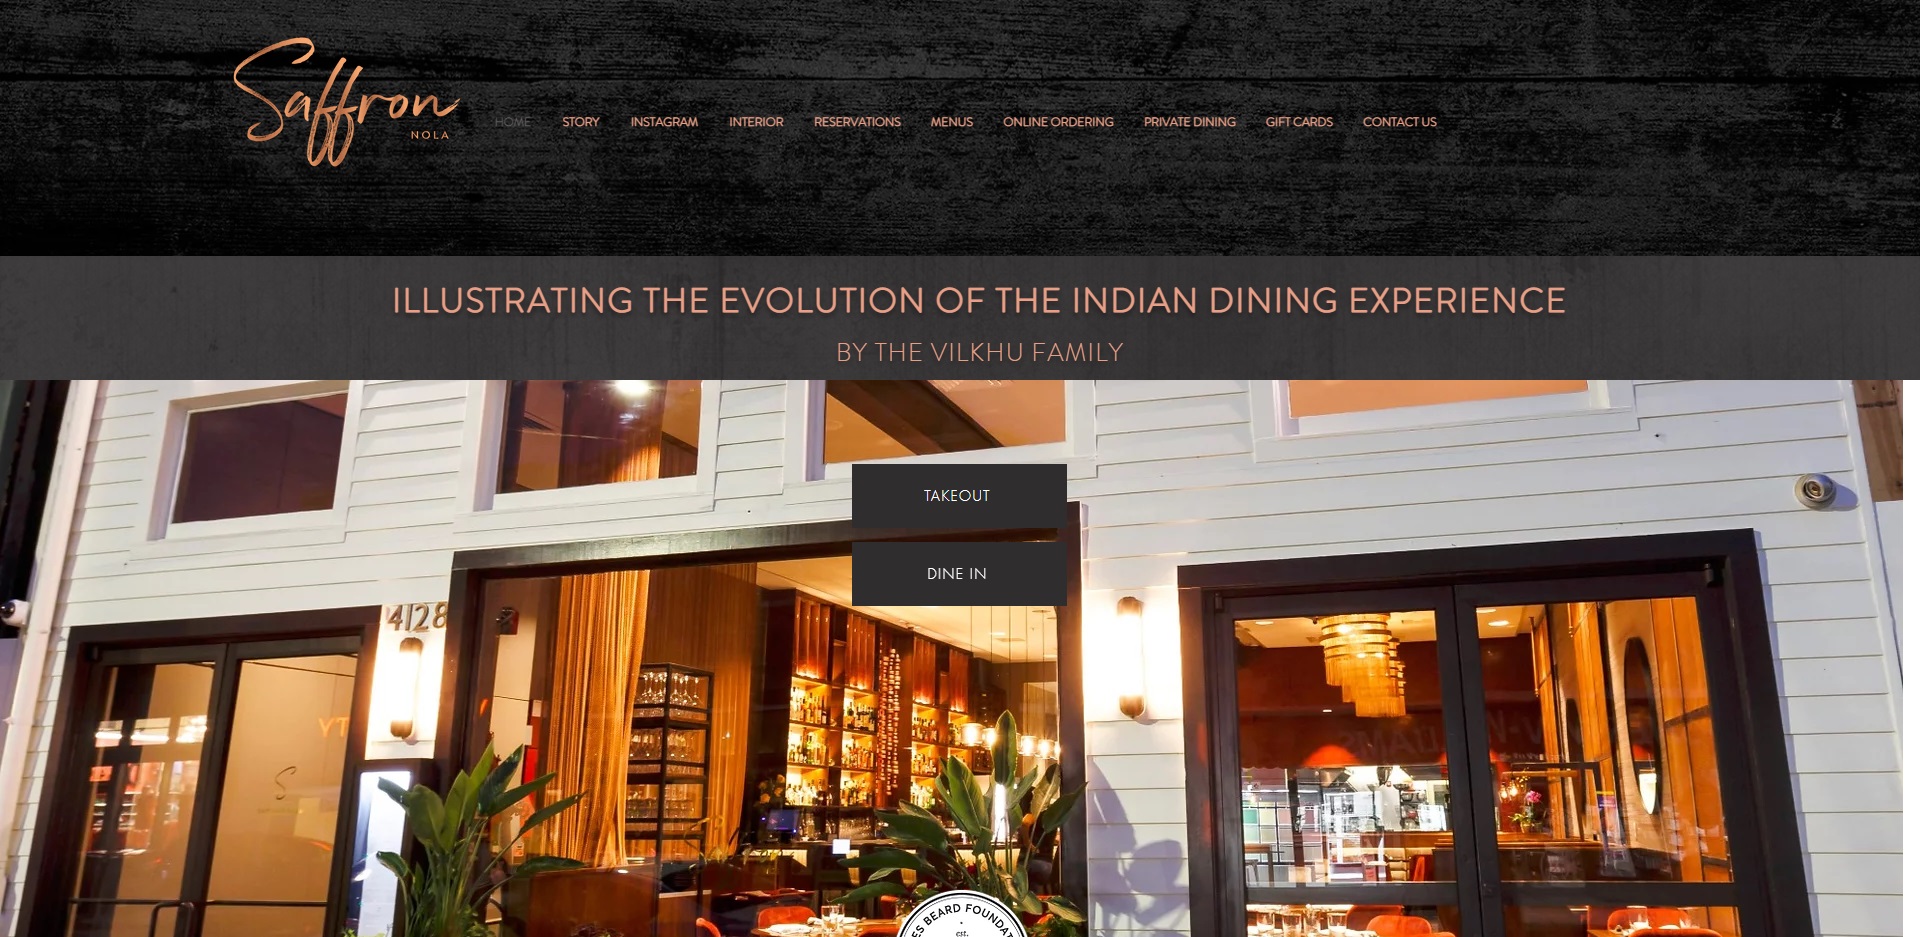 The Best Indian Restaurants in New Orleans, LA